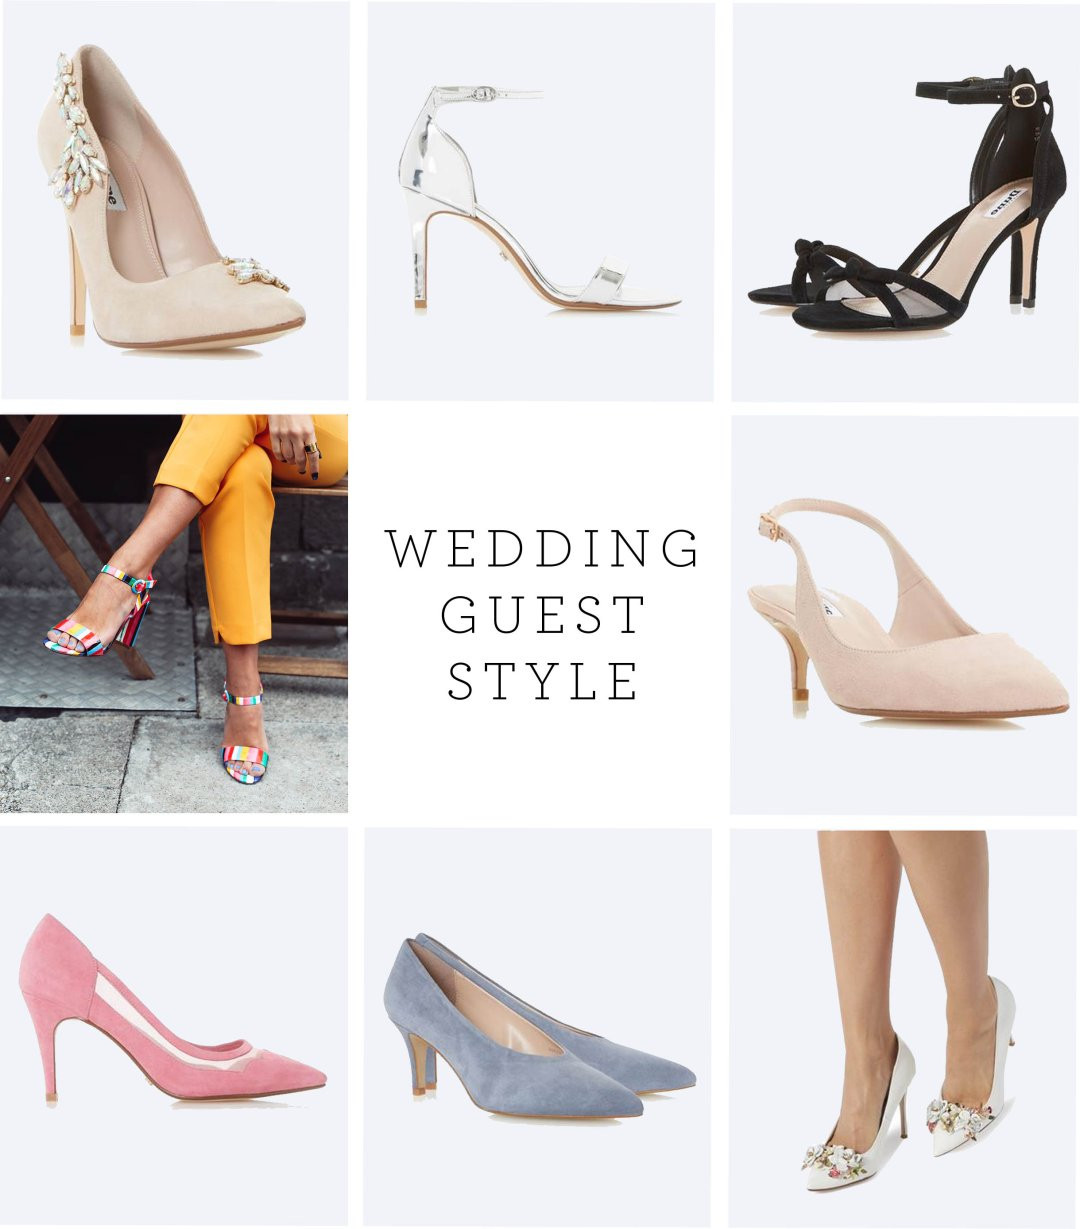 Wedding Guest Shoes
 La s Wedding Guest Shoes and Sandals